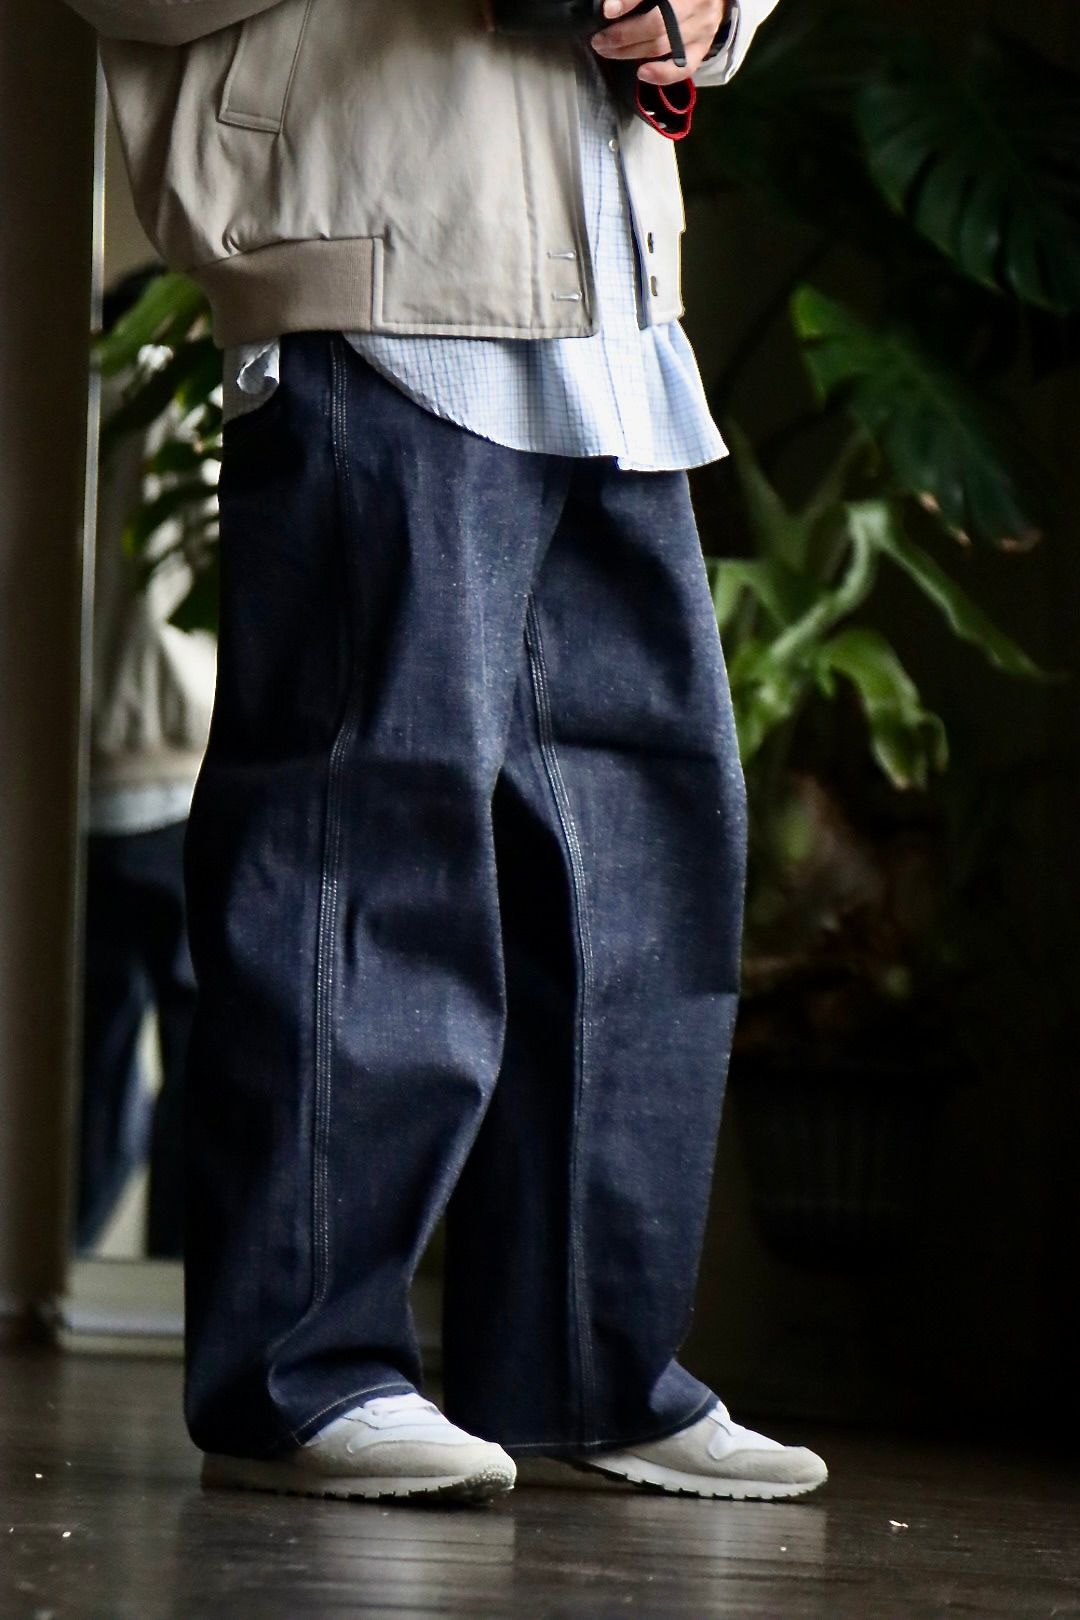 A.PRESSE 23SSデニム Military Denim Trousers(23SAP-04-07H)INDIGO 